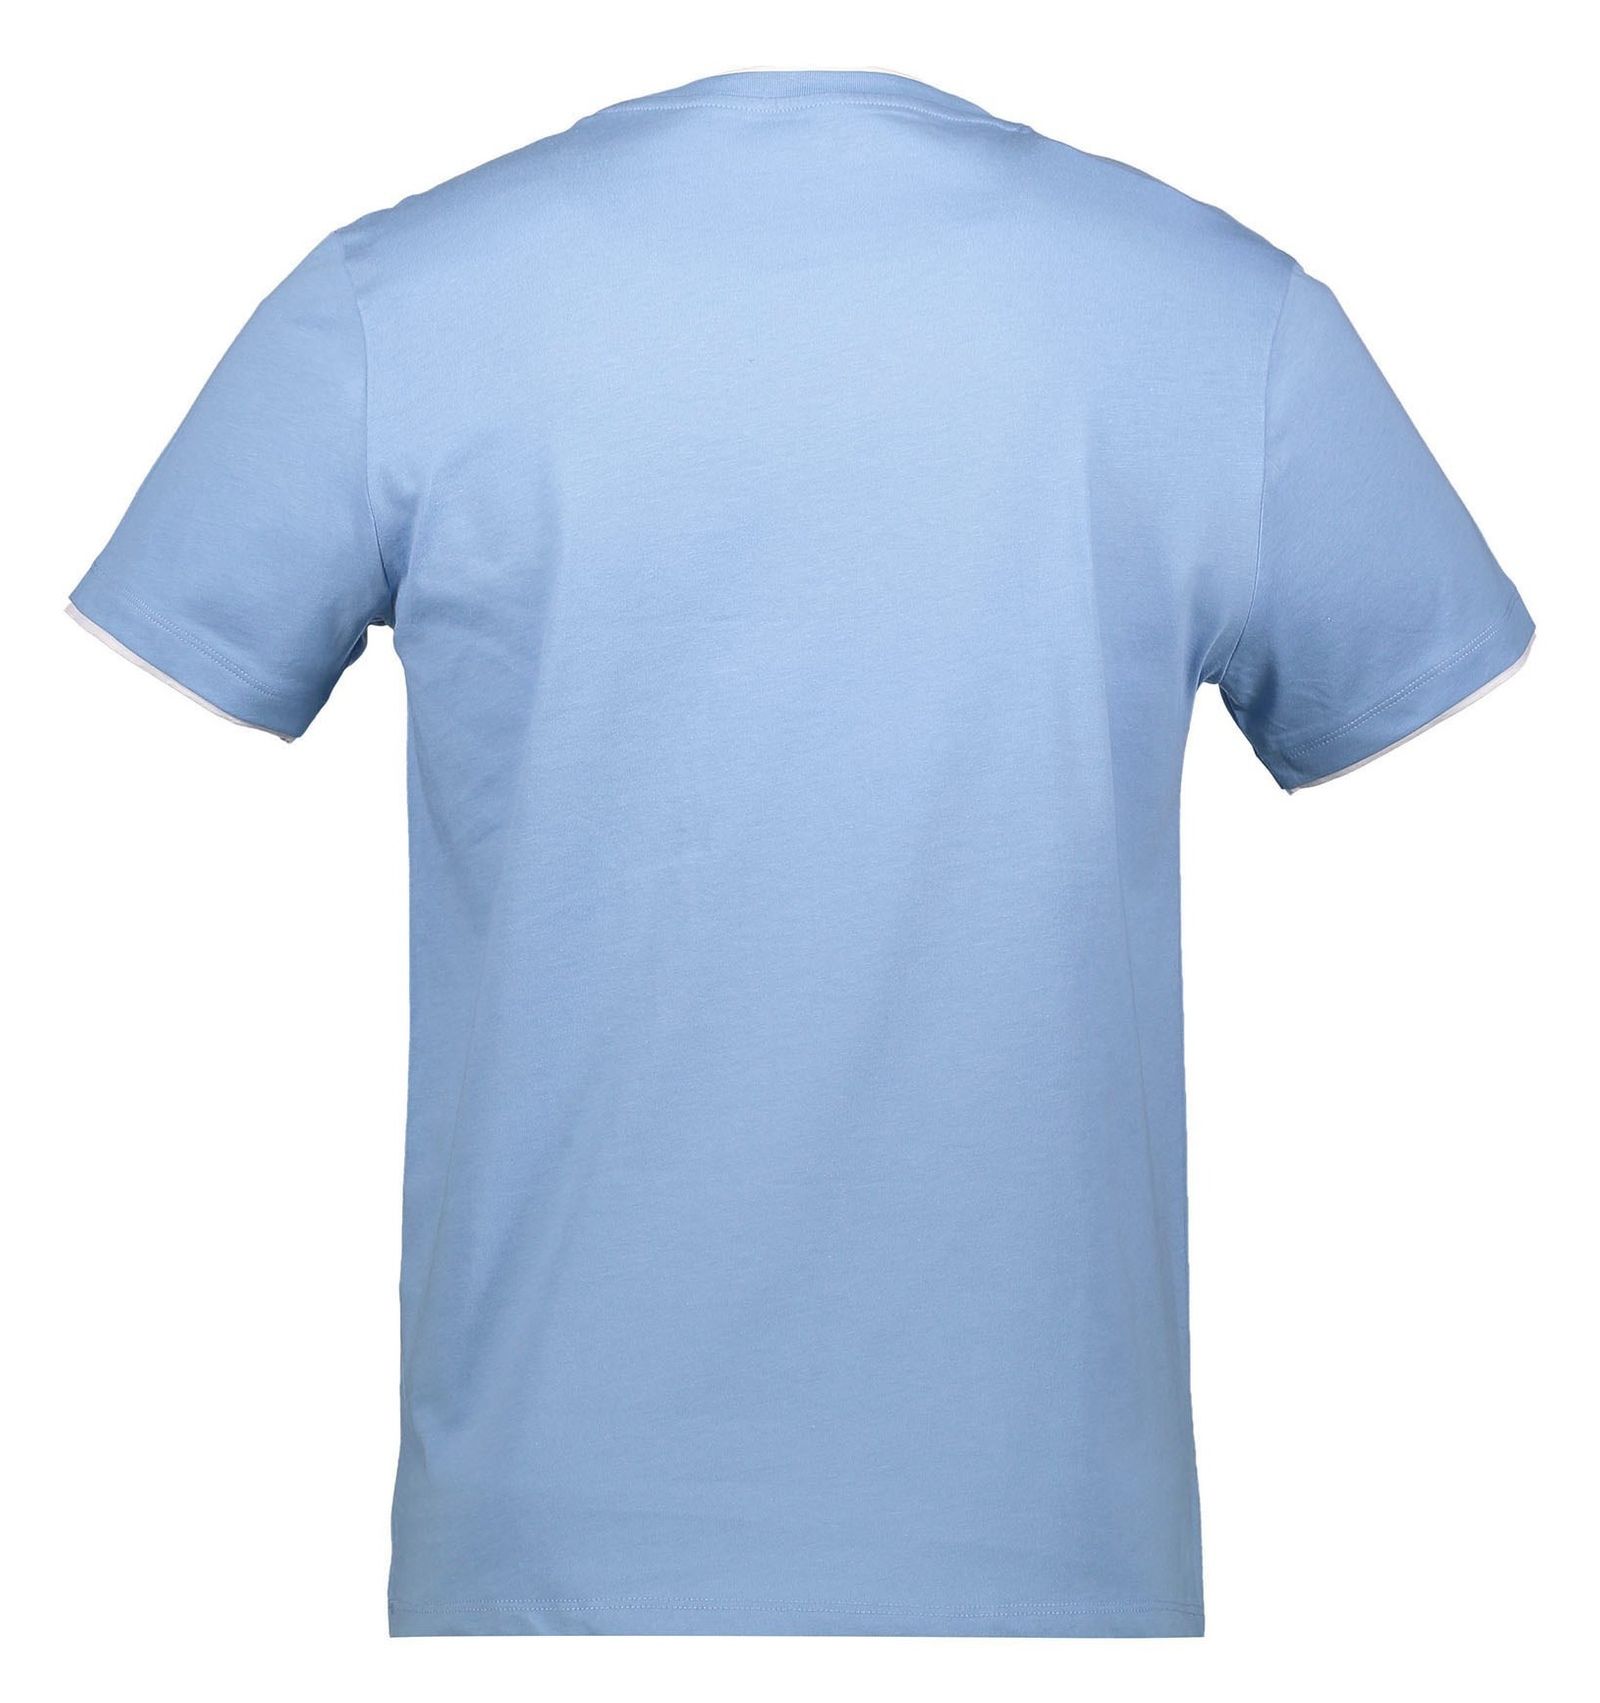 تی شرت نخی یقه گرد مردانه - دفکتو - آبي روشن - 5